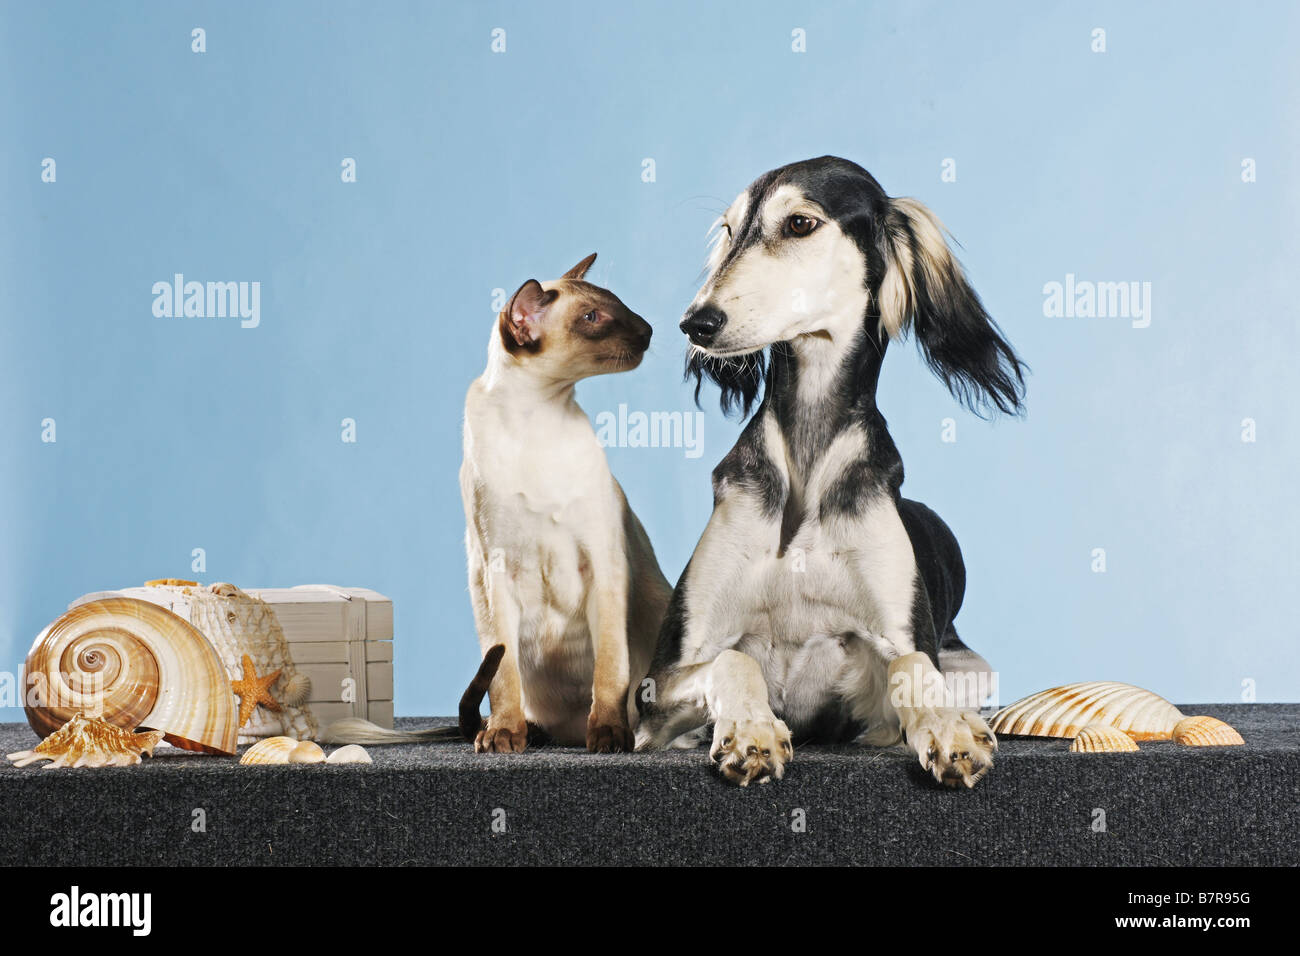 Animal Friendship Saluki Dog And Siamese Cat Stock Photo Alamy